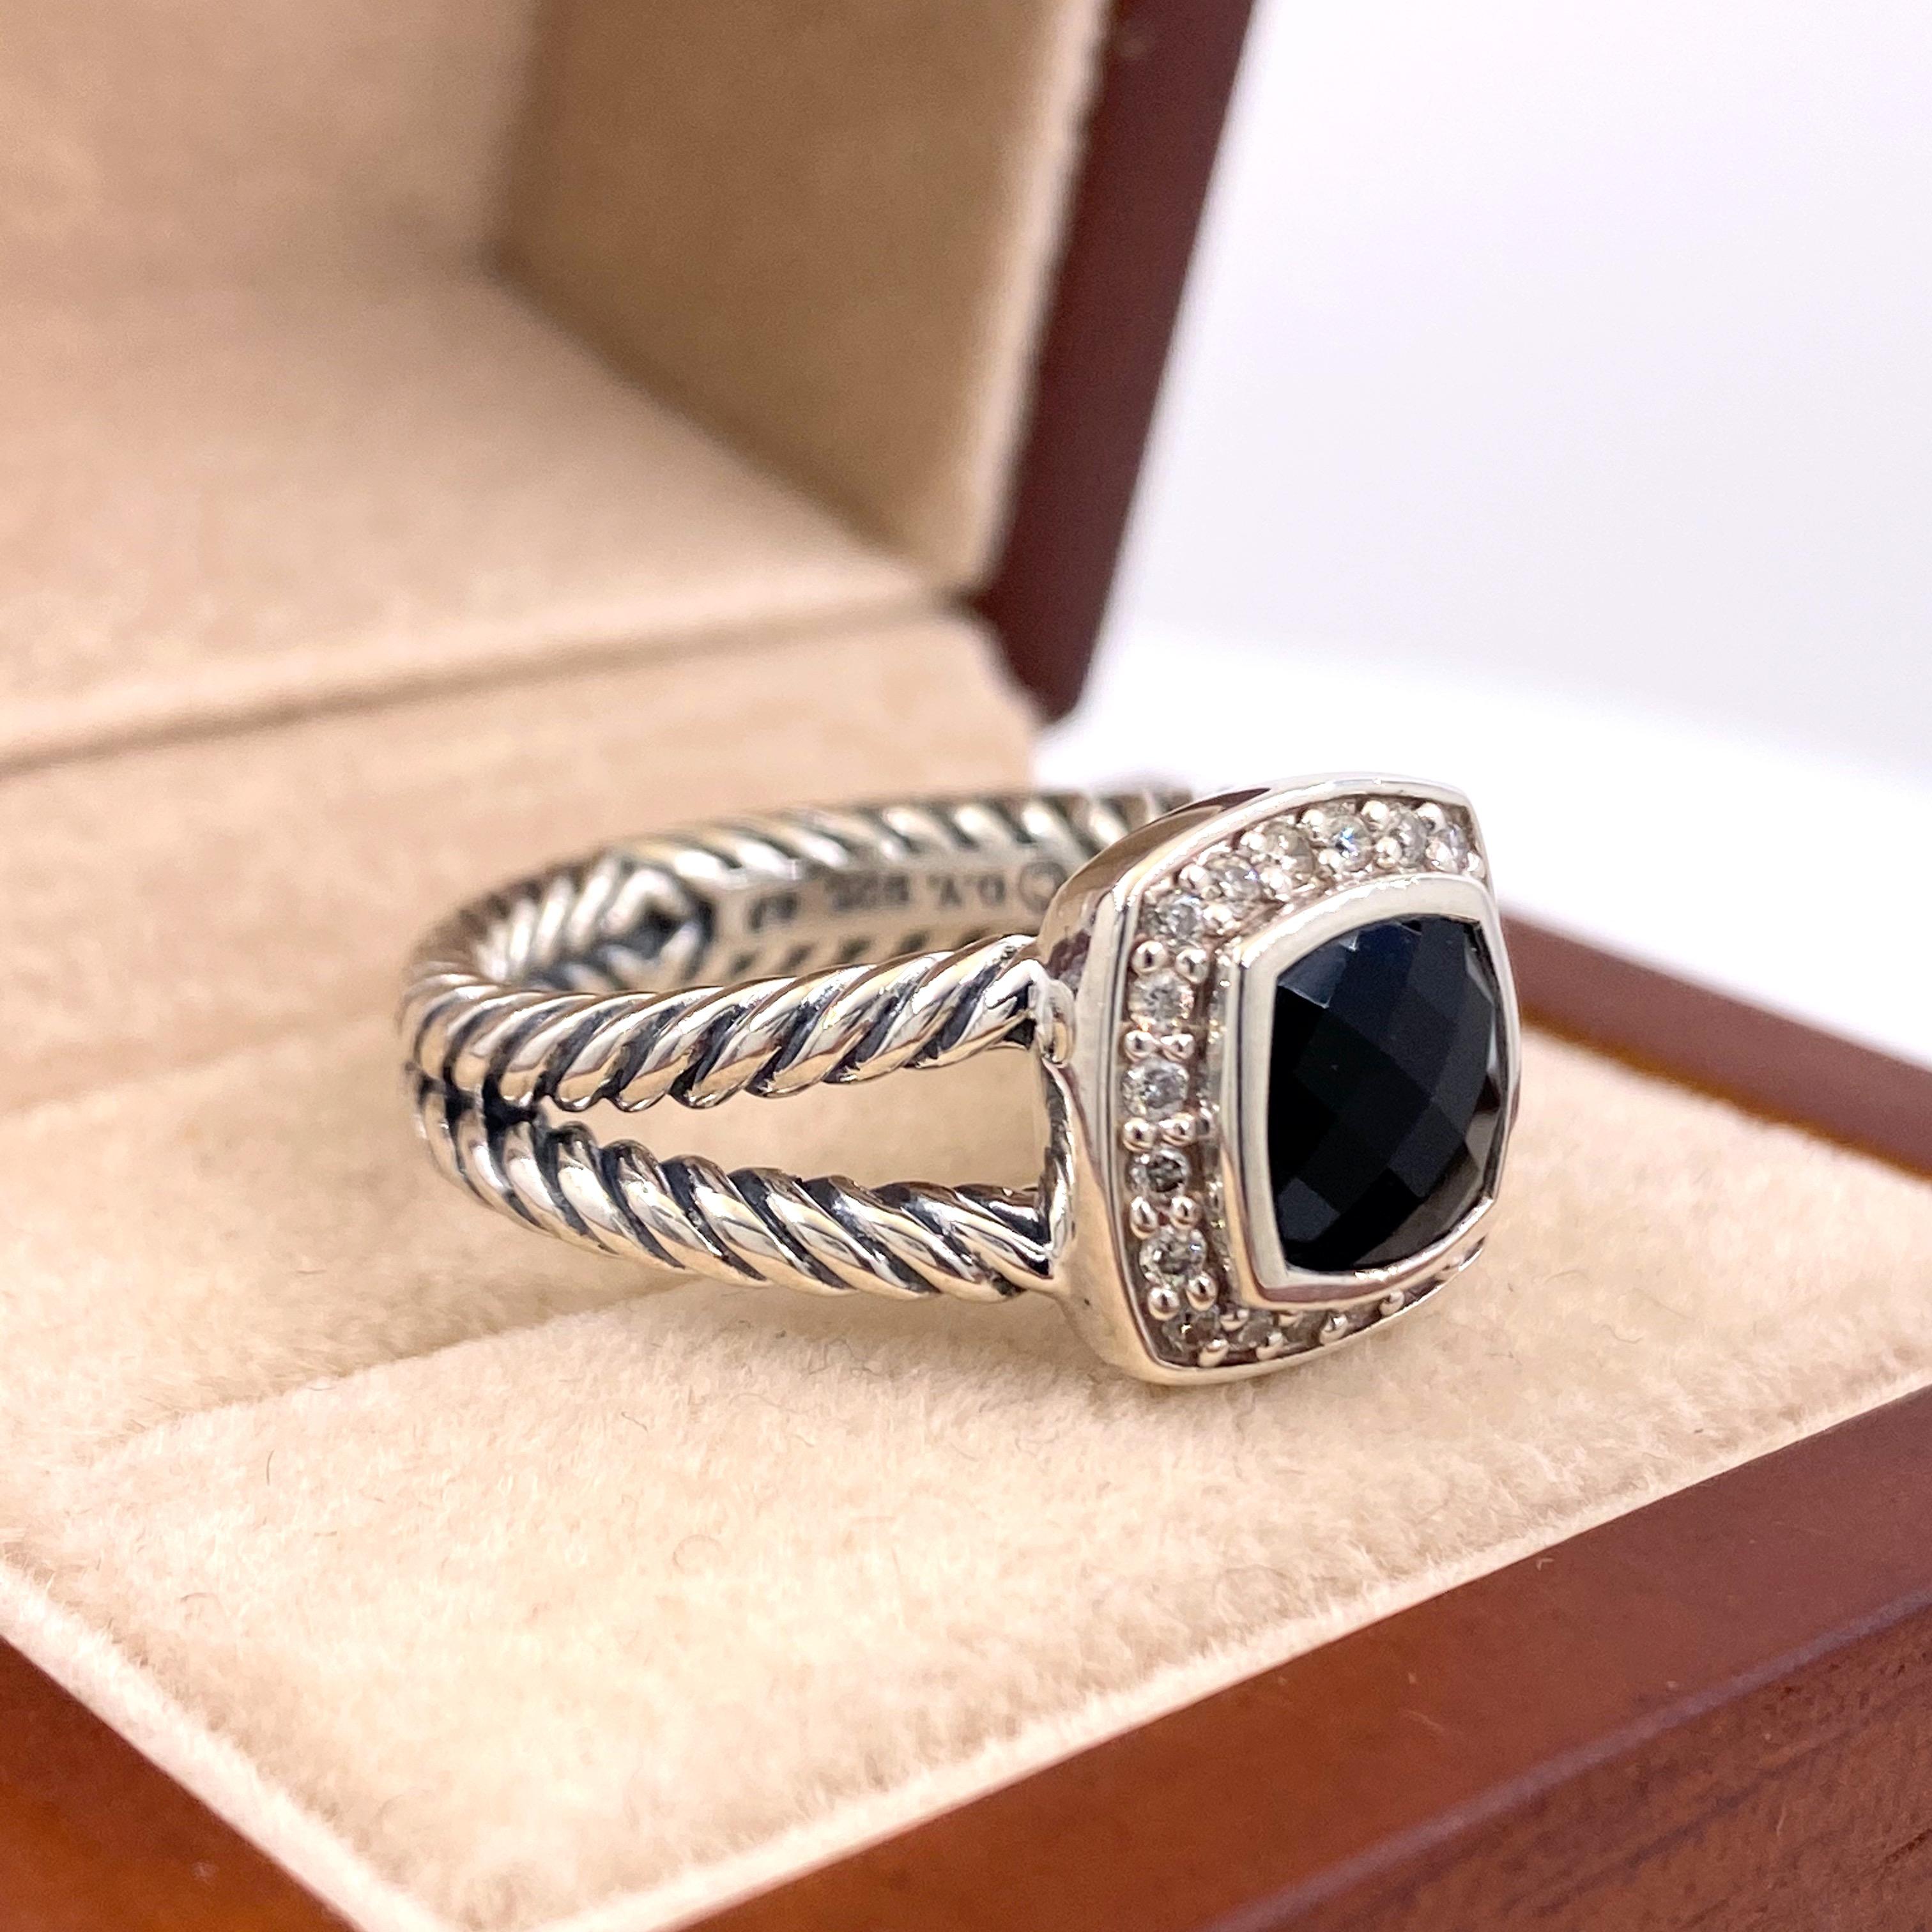 David Yurman Petite Albion Split Shank Ring with Diamonds
Style:  R0744DSSABOD165
Metal:  Sterling Silver
Size:  7.5 sizable
Gemstone:  Black Onyx 7 MM
Diamonds:  0.17 tcw
Hallmark:  ©D.Y. 925
Includes:  Elegant Ring Box
Retail: 